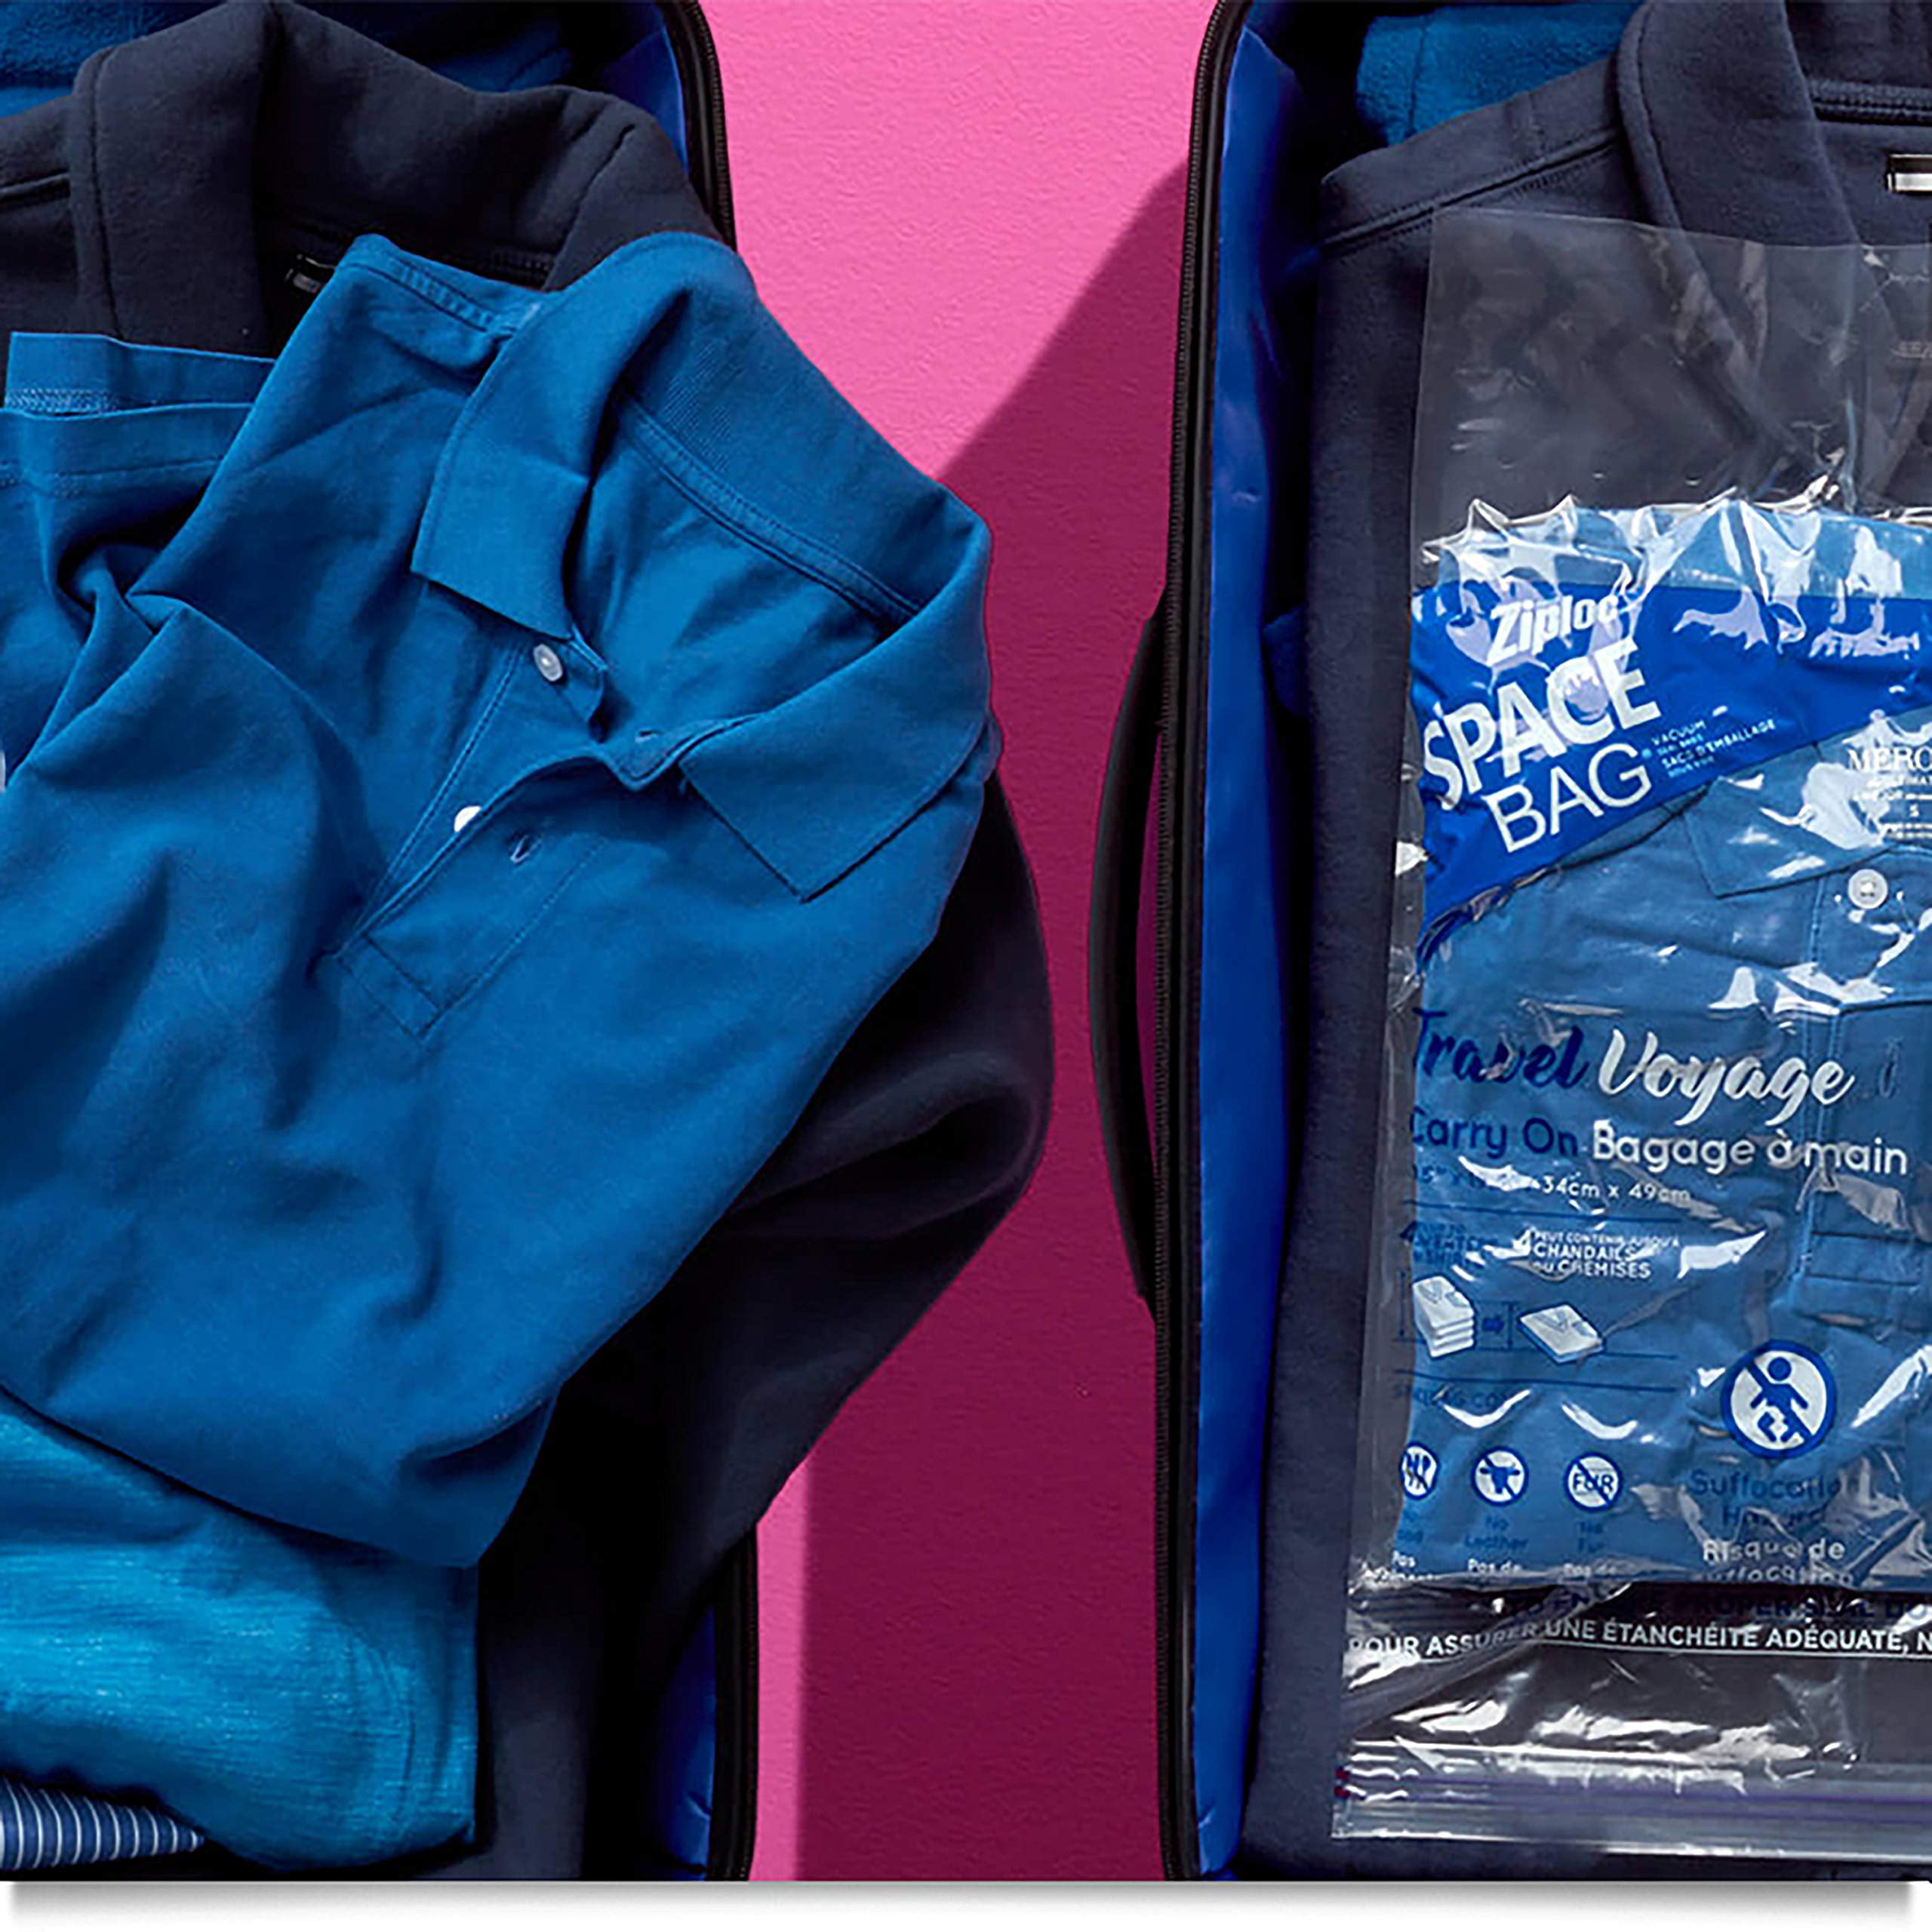 Ziploc Space Bag, Travel Bags - Poly Pack, 2 pack 